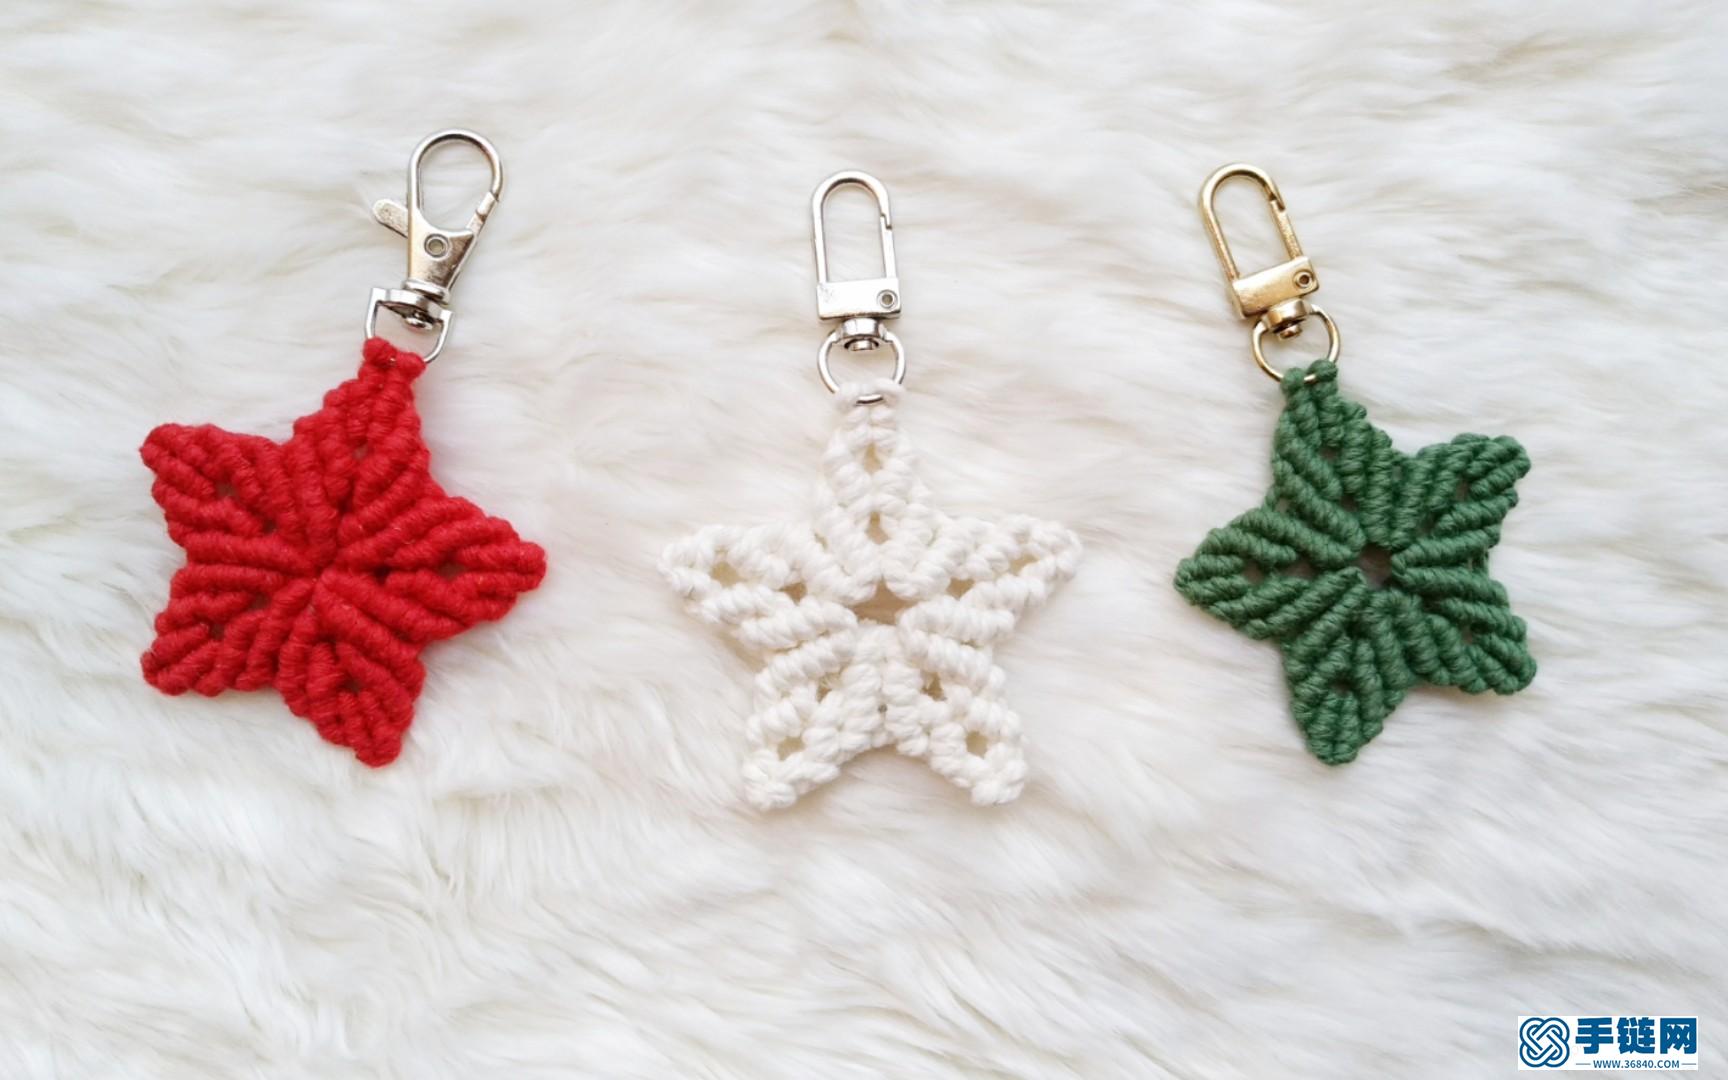  Macrame手工编织圣诞五角星挂件装饰 | 编绳 | 挂件 | 挂饰 | 手工教程